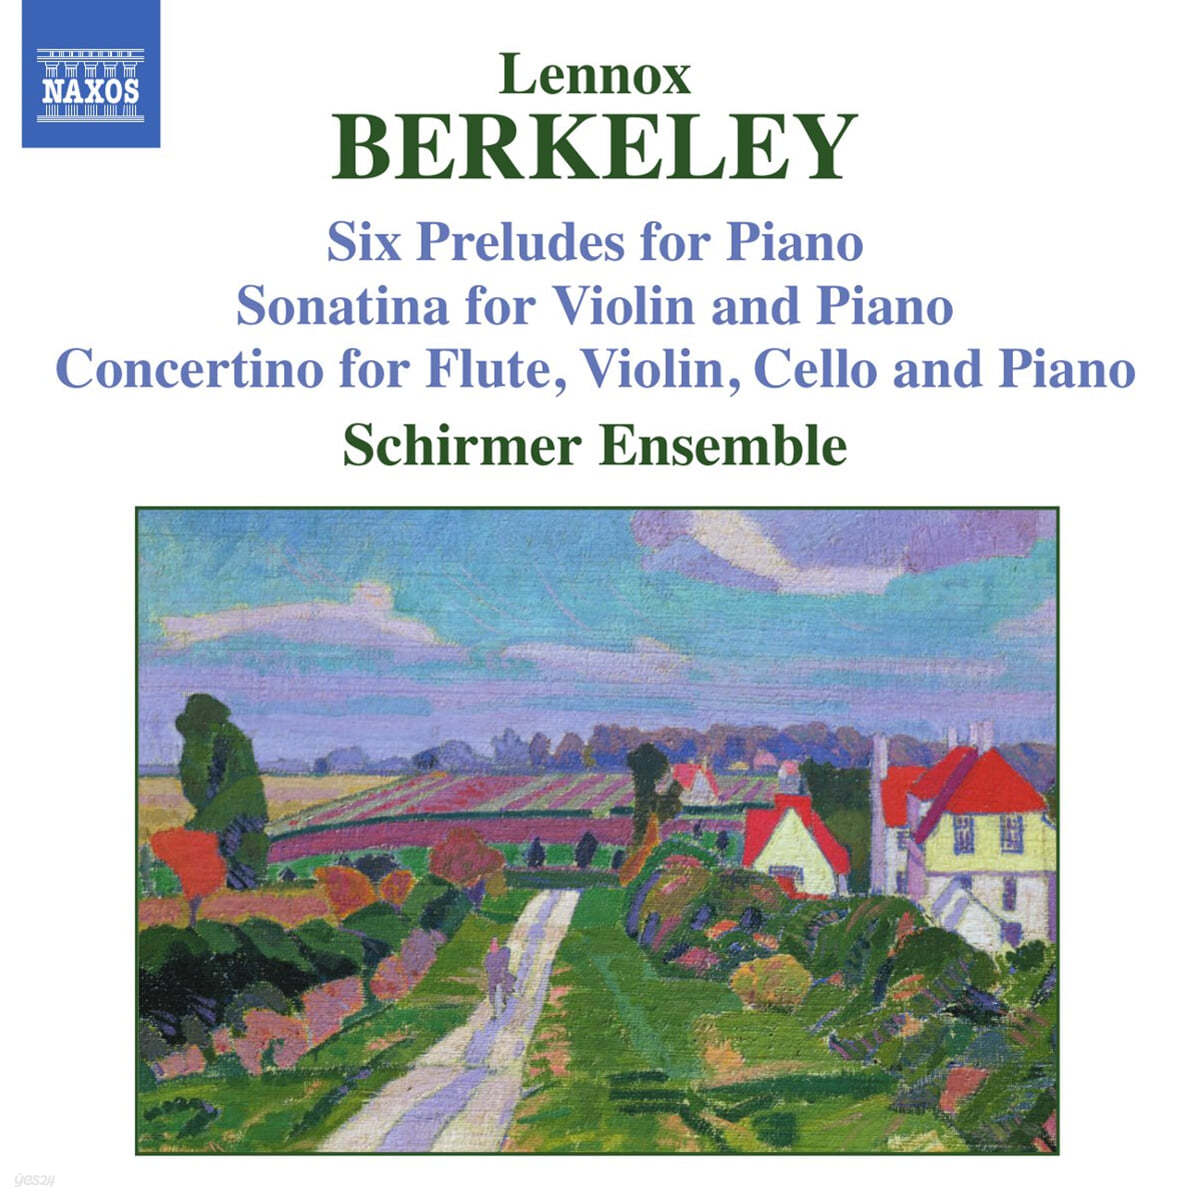 Schirmer Ensemble 레녹스 버클리: 현악 모음집 (Lennox Berkeley: Sonatina for Violin and Piano Op.17, Duo for Cello and Piano Op.101b) 